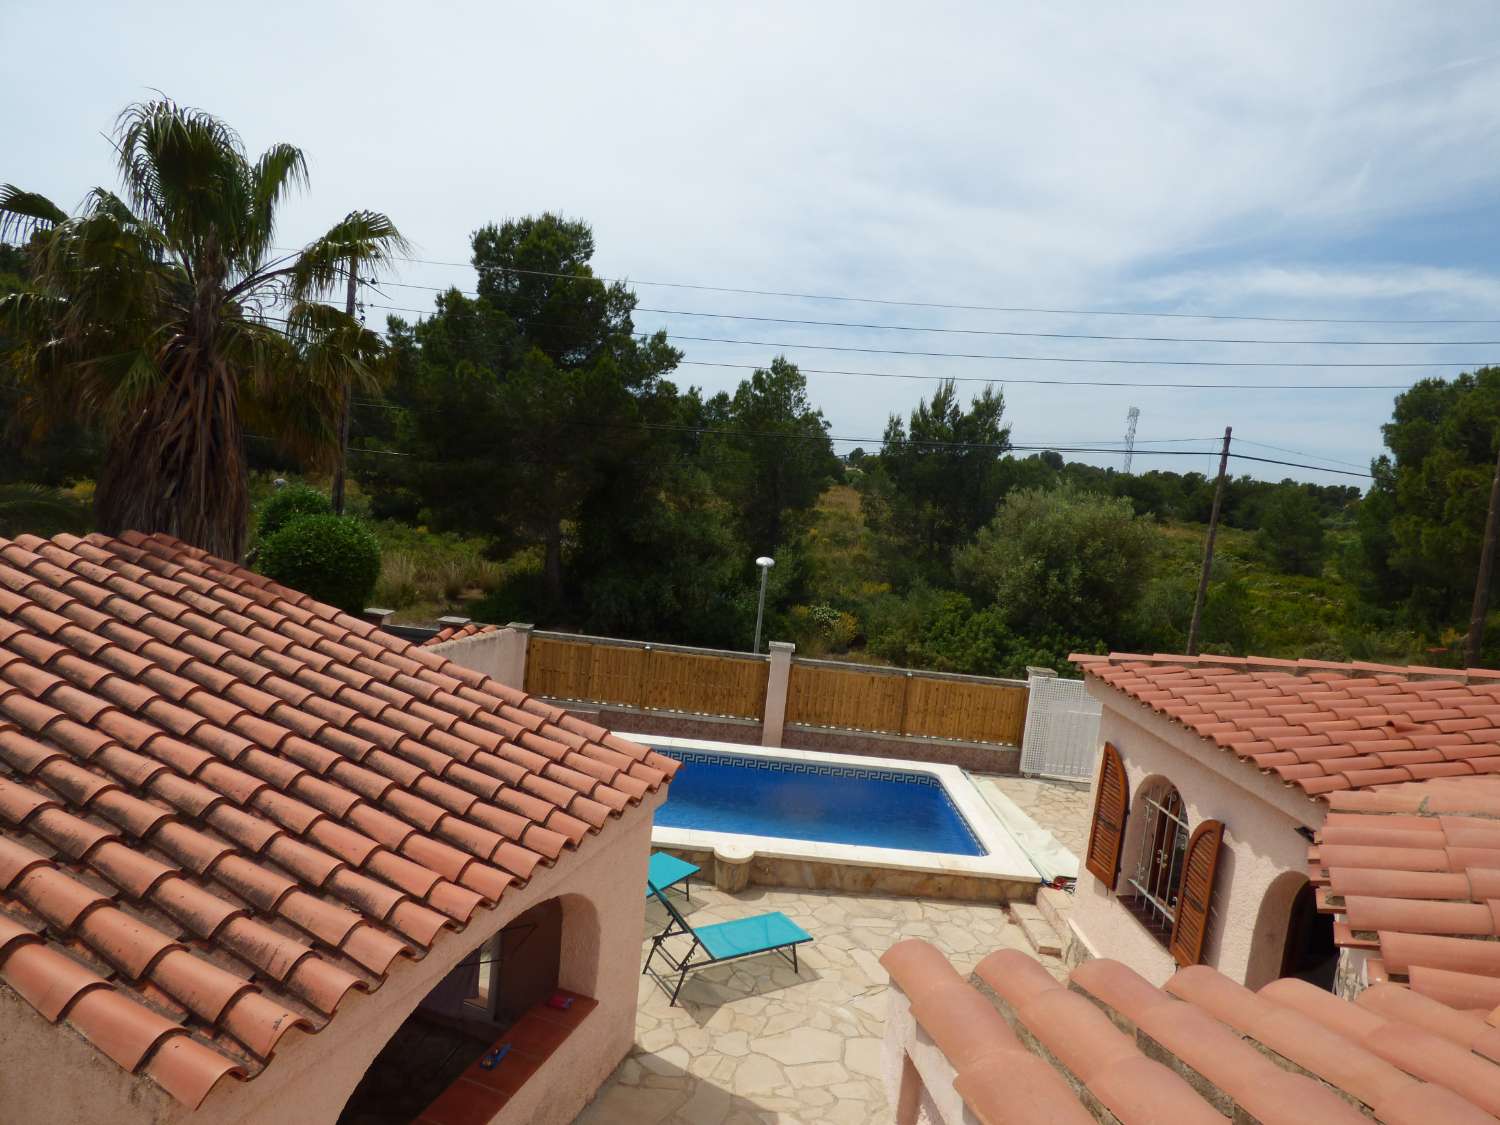 Nice villa with pool in Las Tras Calas near the beach!